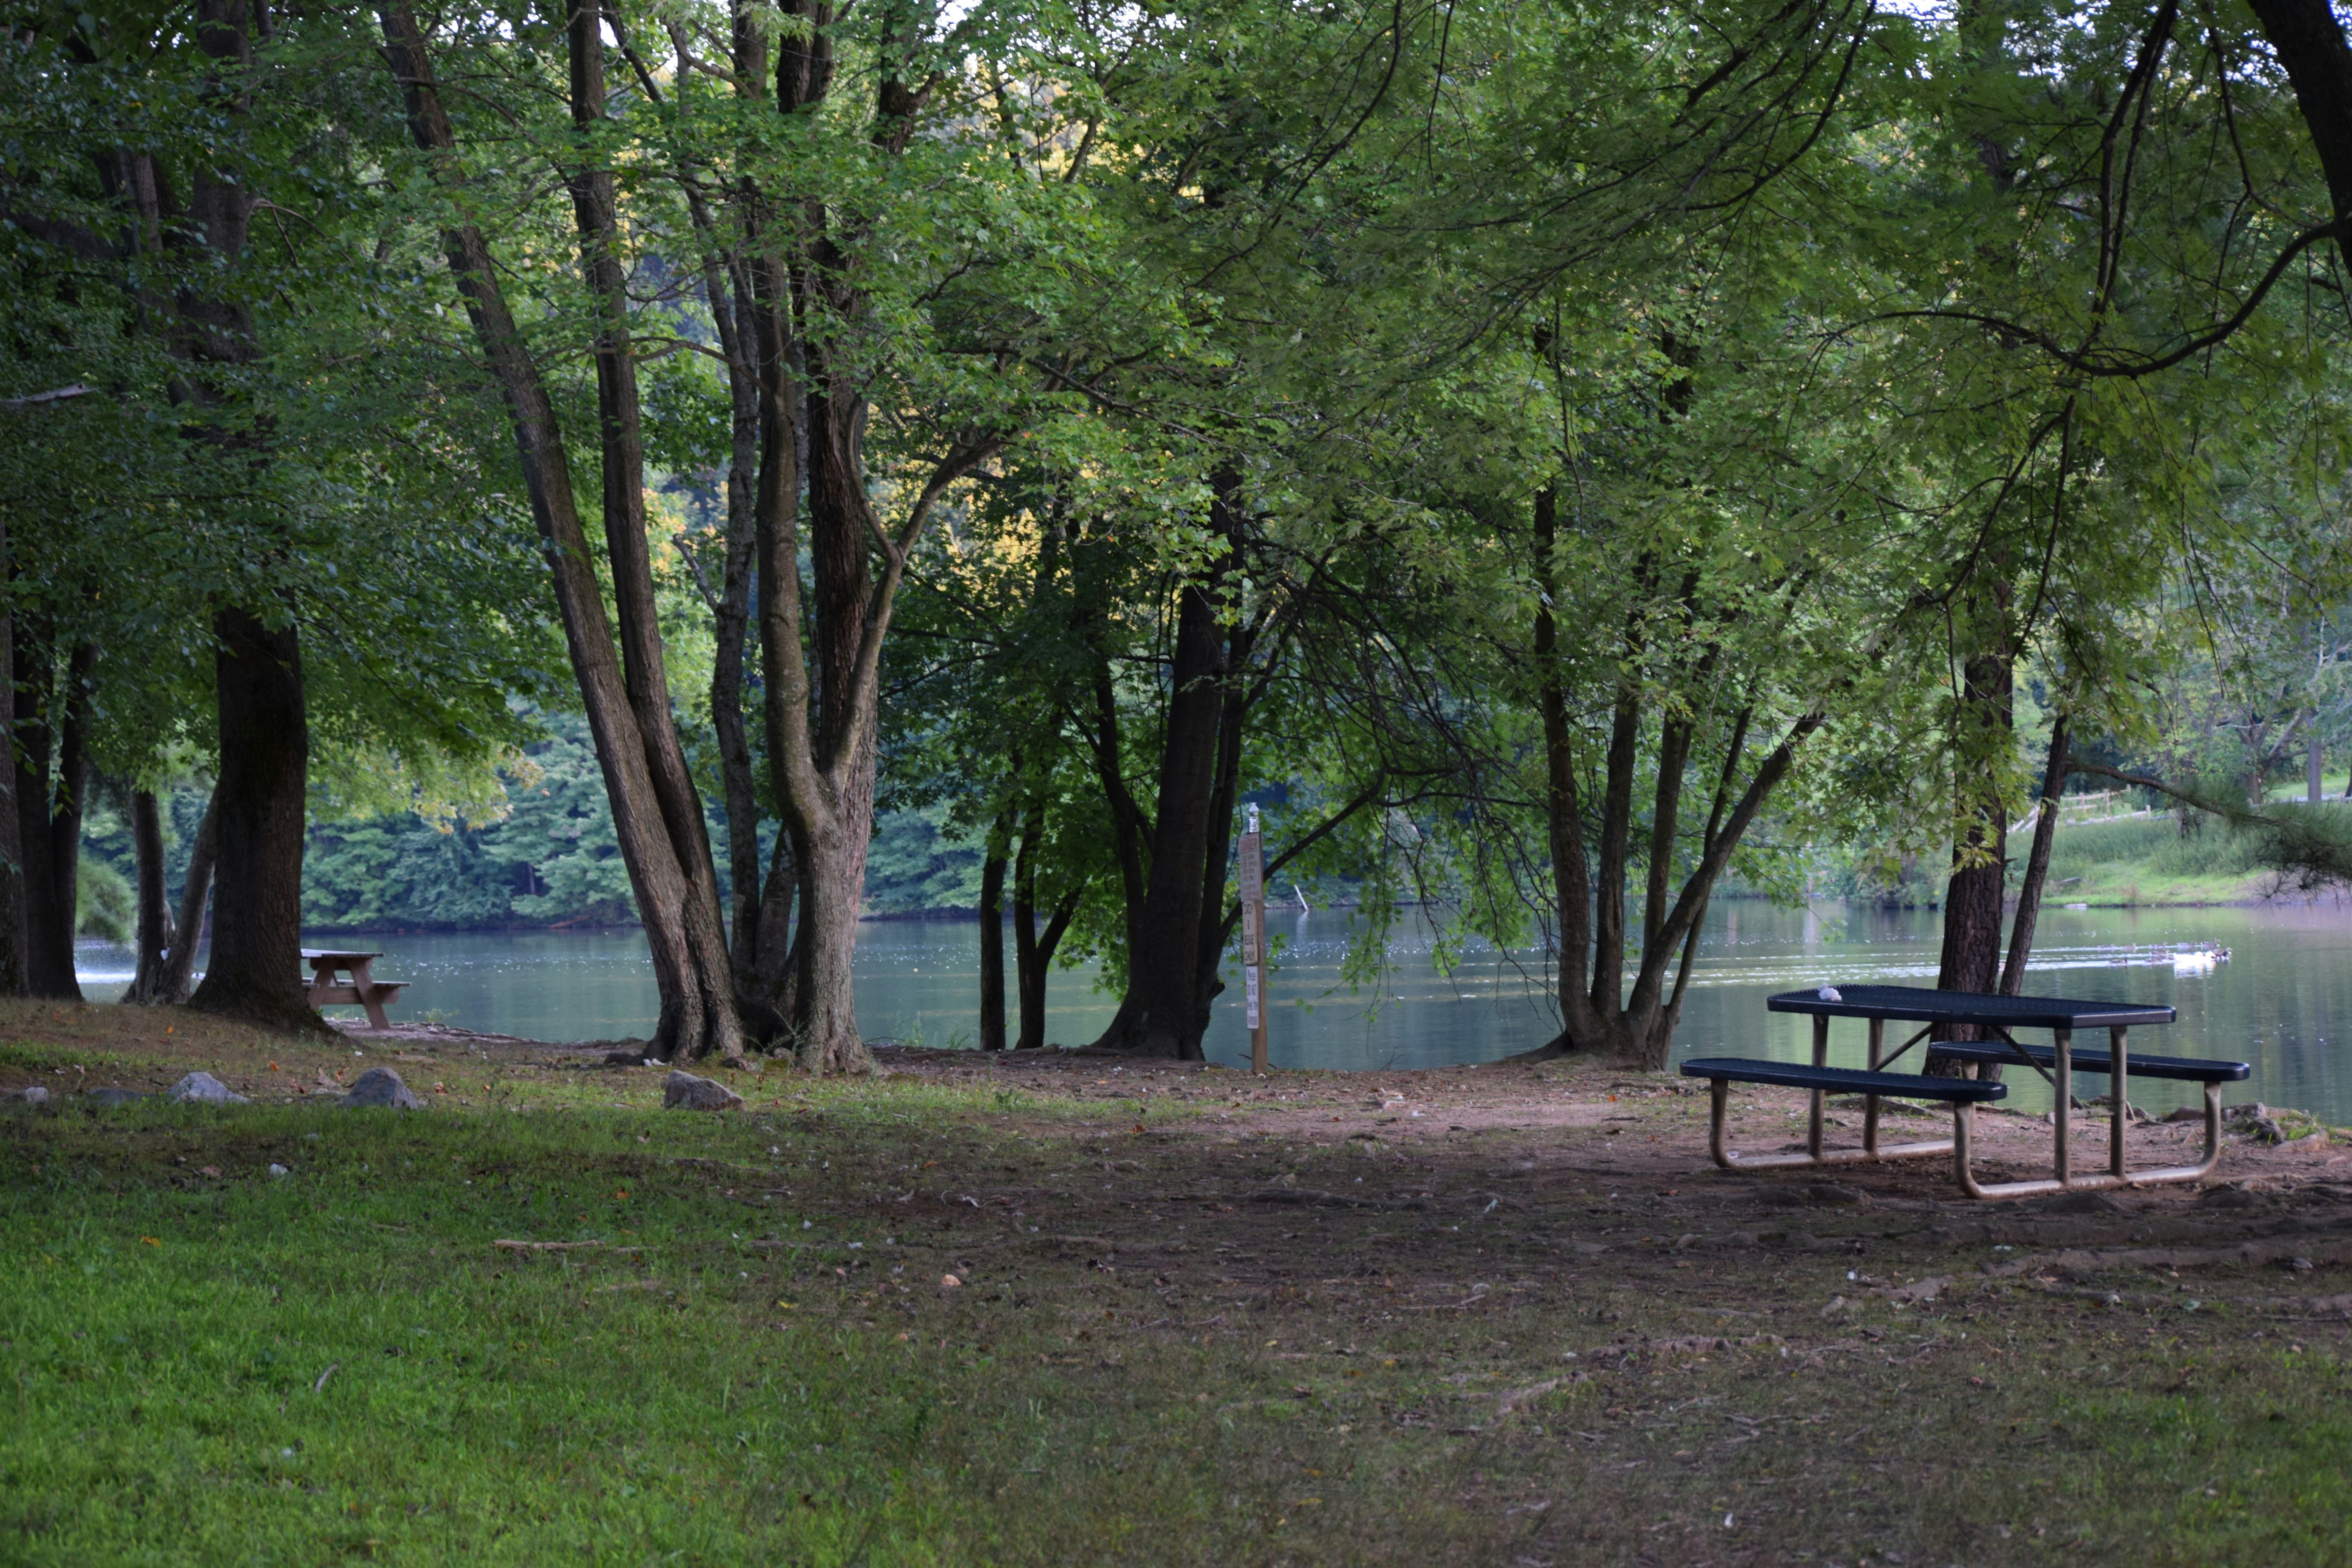 Perfect picnic spot at Carousel park.